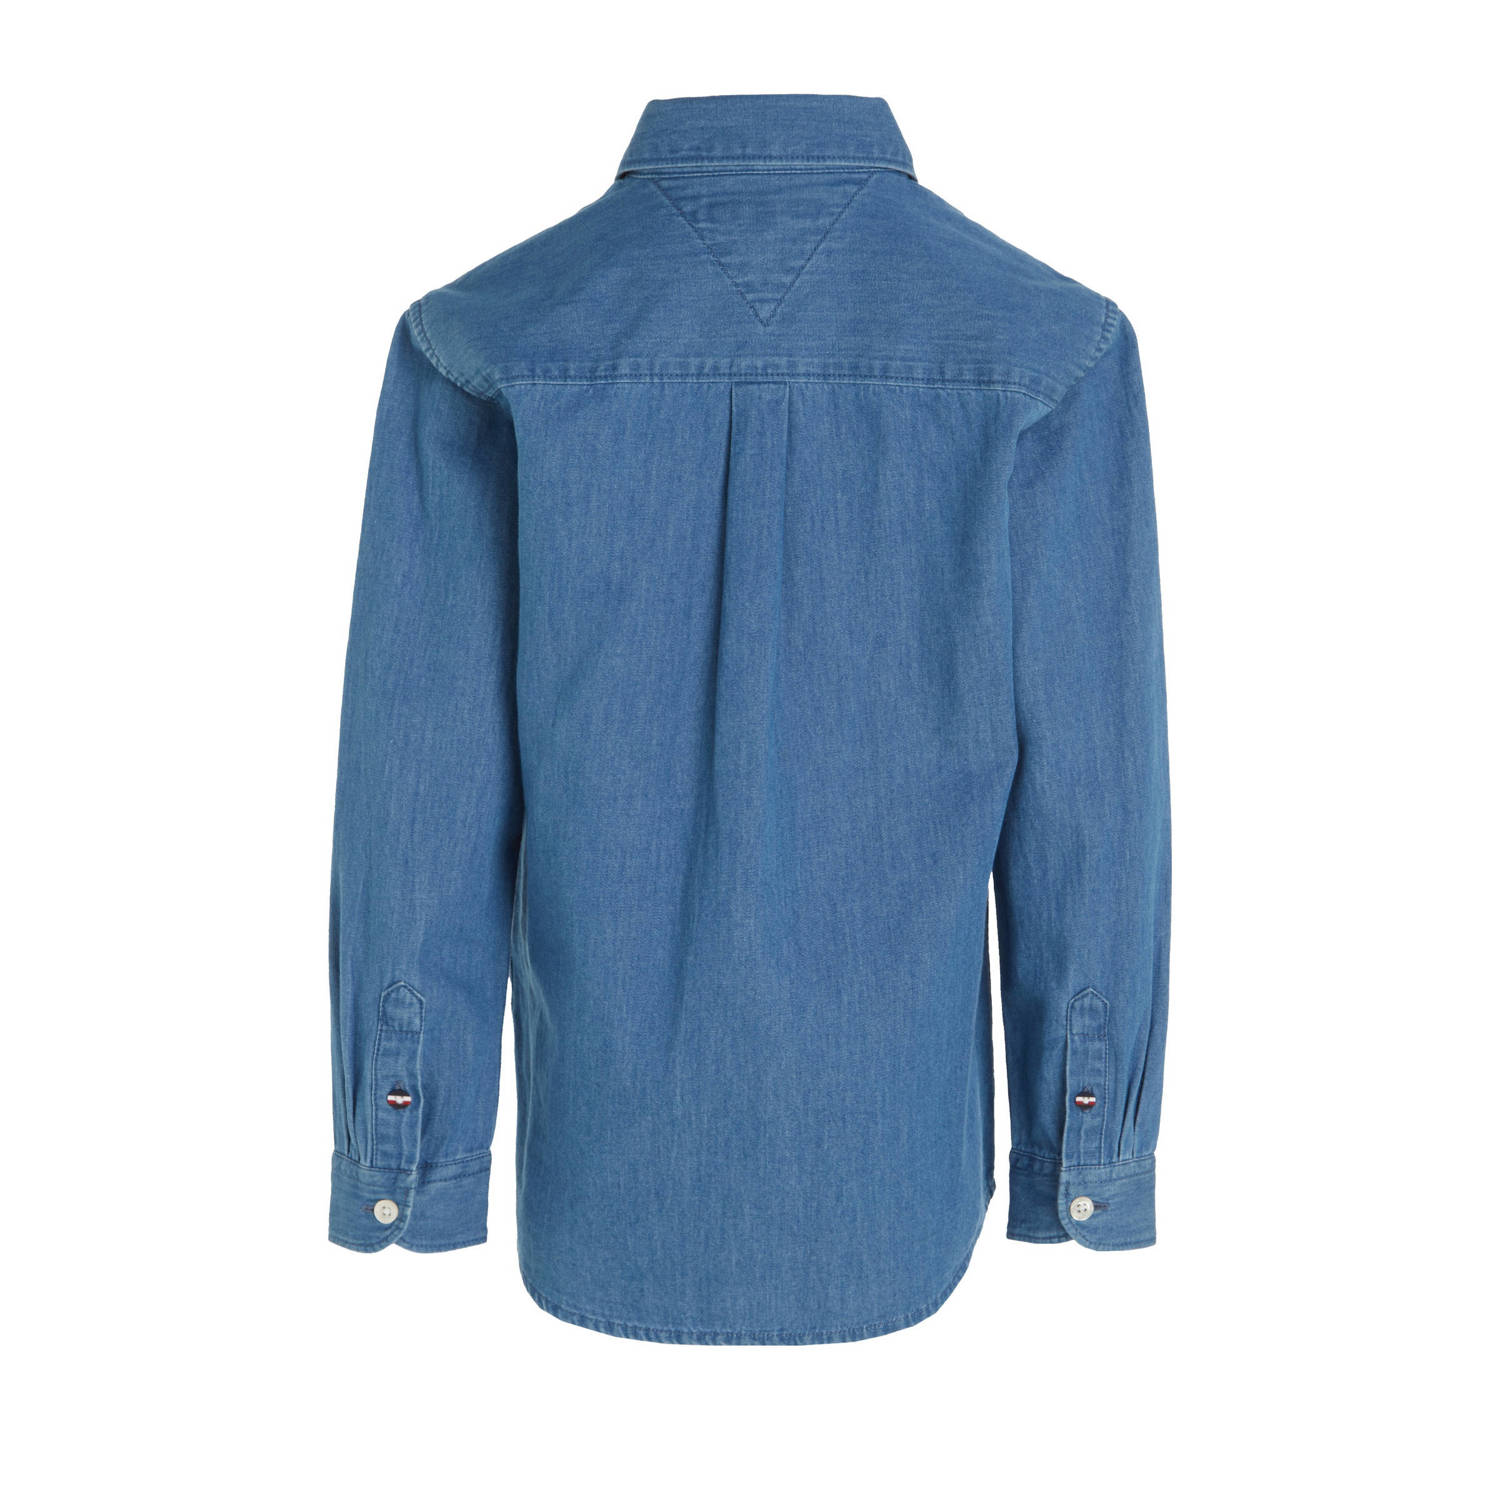 Tommy Hilfiger overhemd CHAMBRAY denimblauw